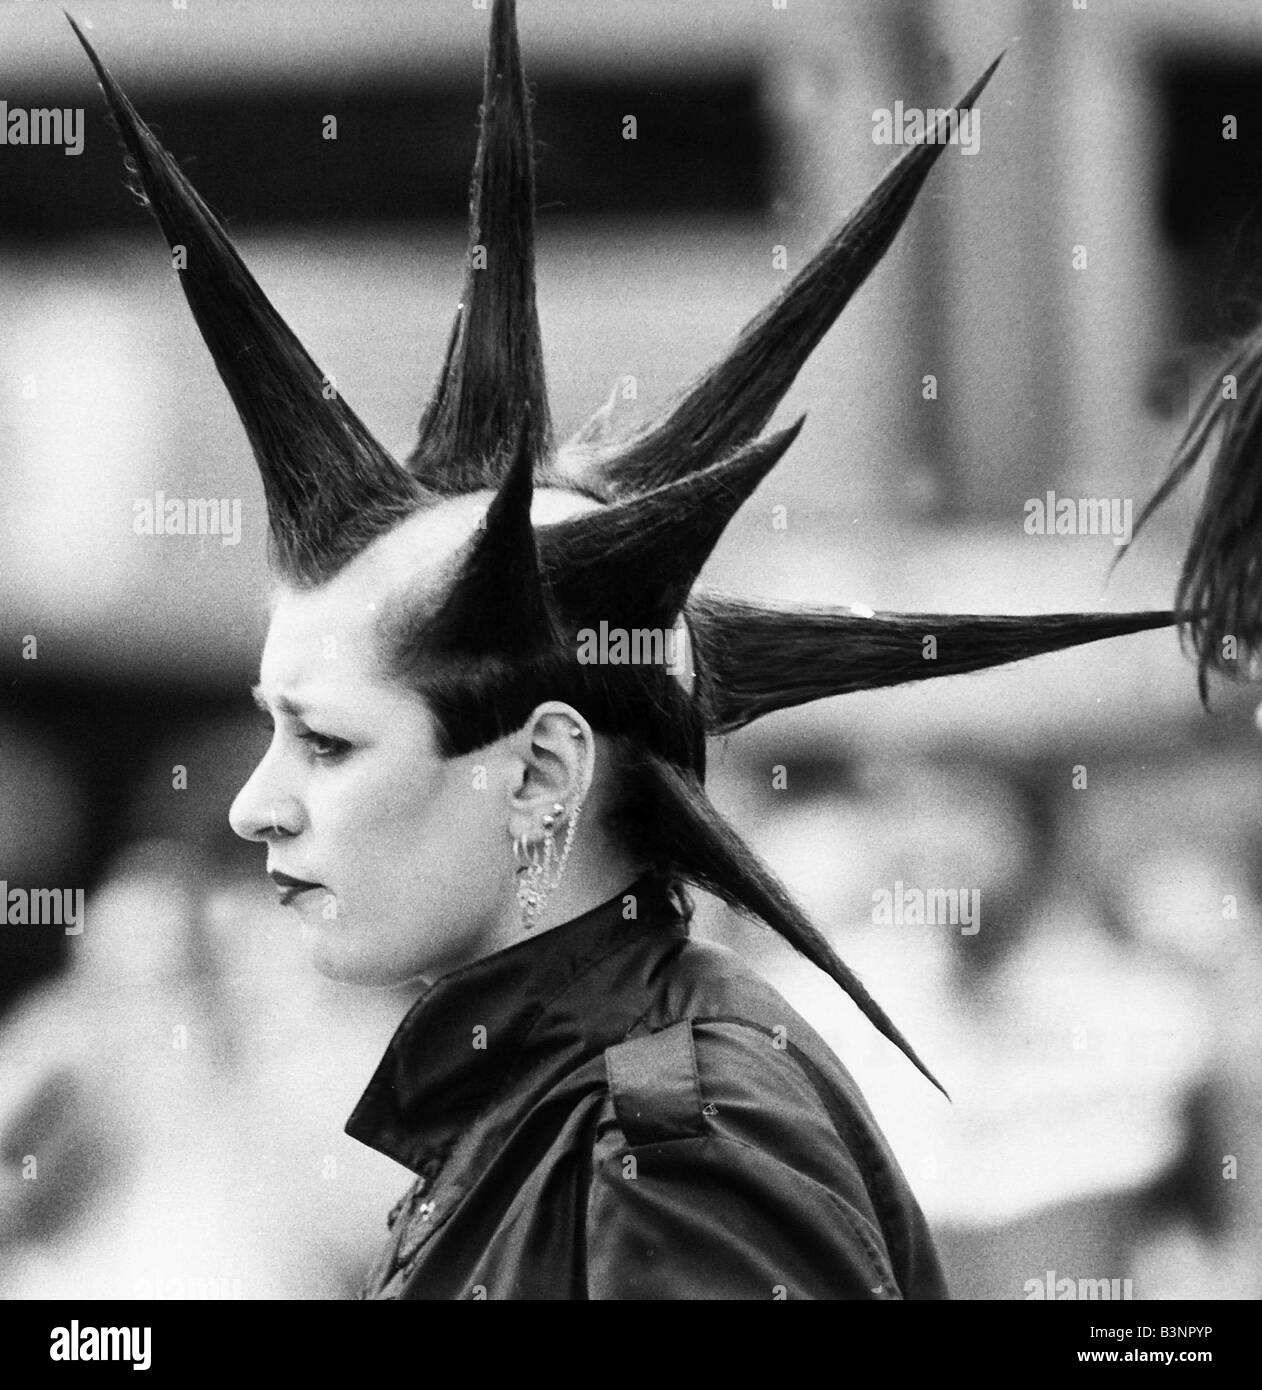 teenage-punk-girl-with-spiky-hair-in-london-april-1983-B3NPYP.jpg